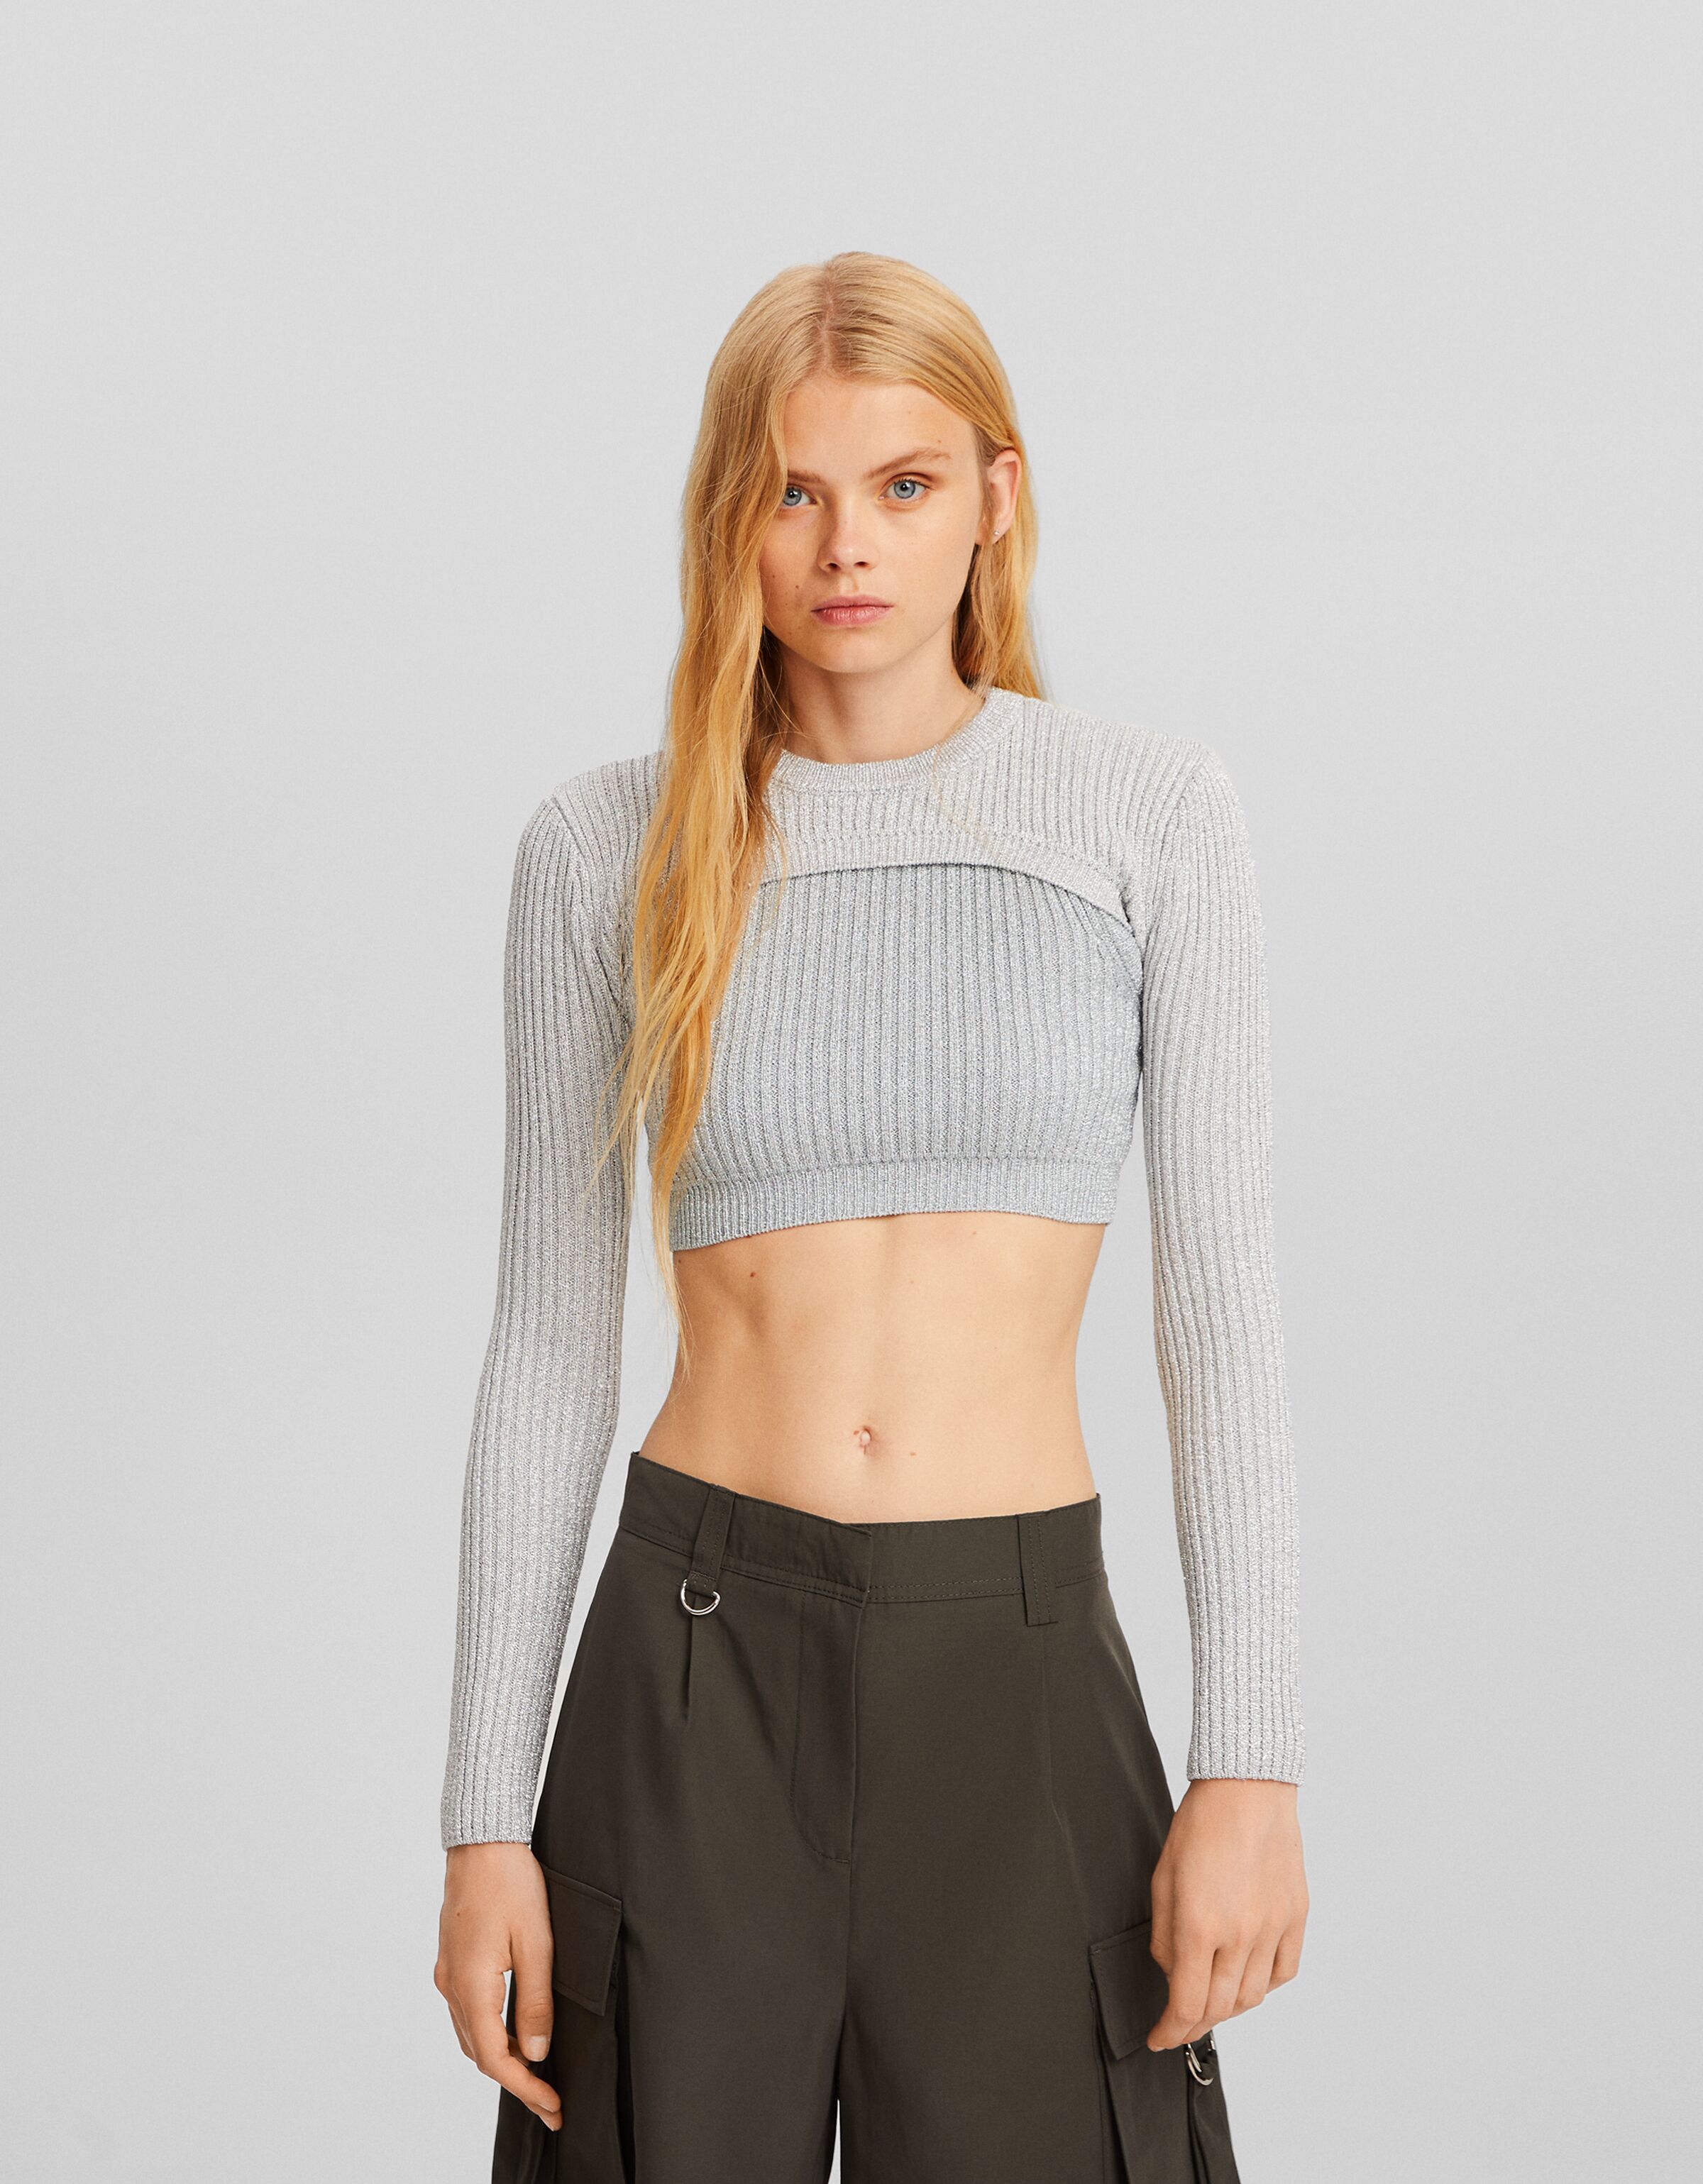 Shimmer arm warmer sweater - Tops and corsets - BSK Teen | Bershka